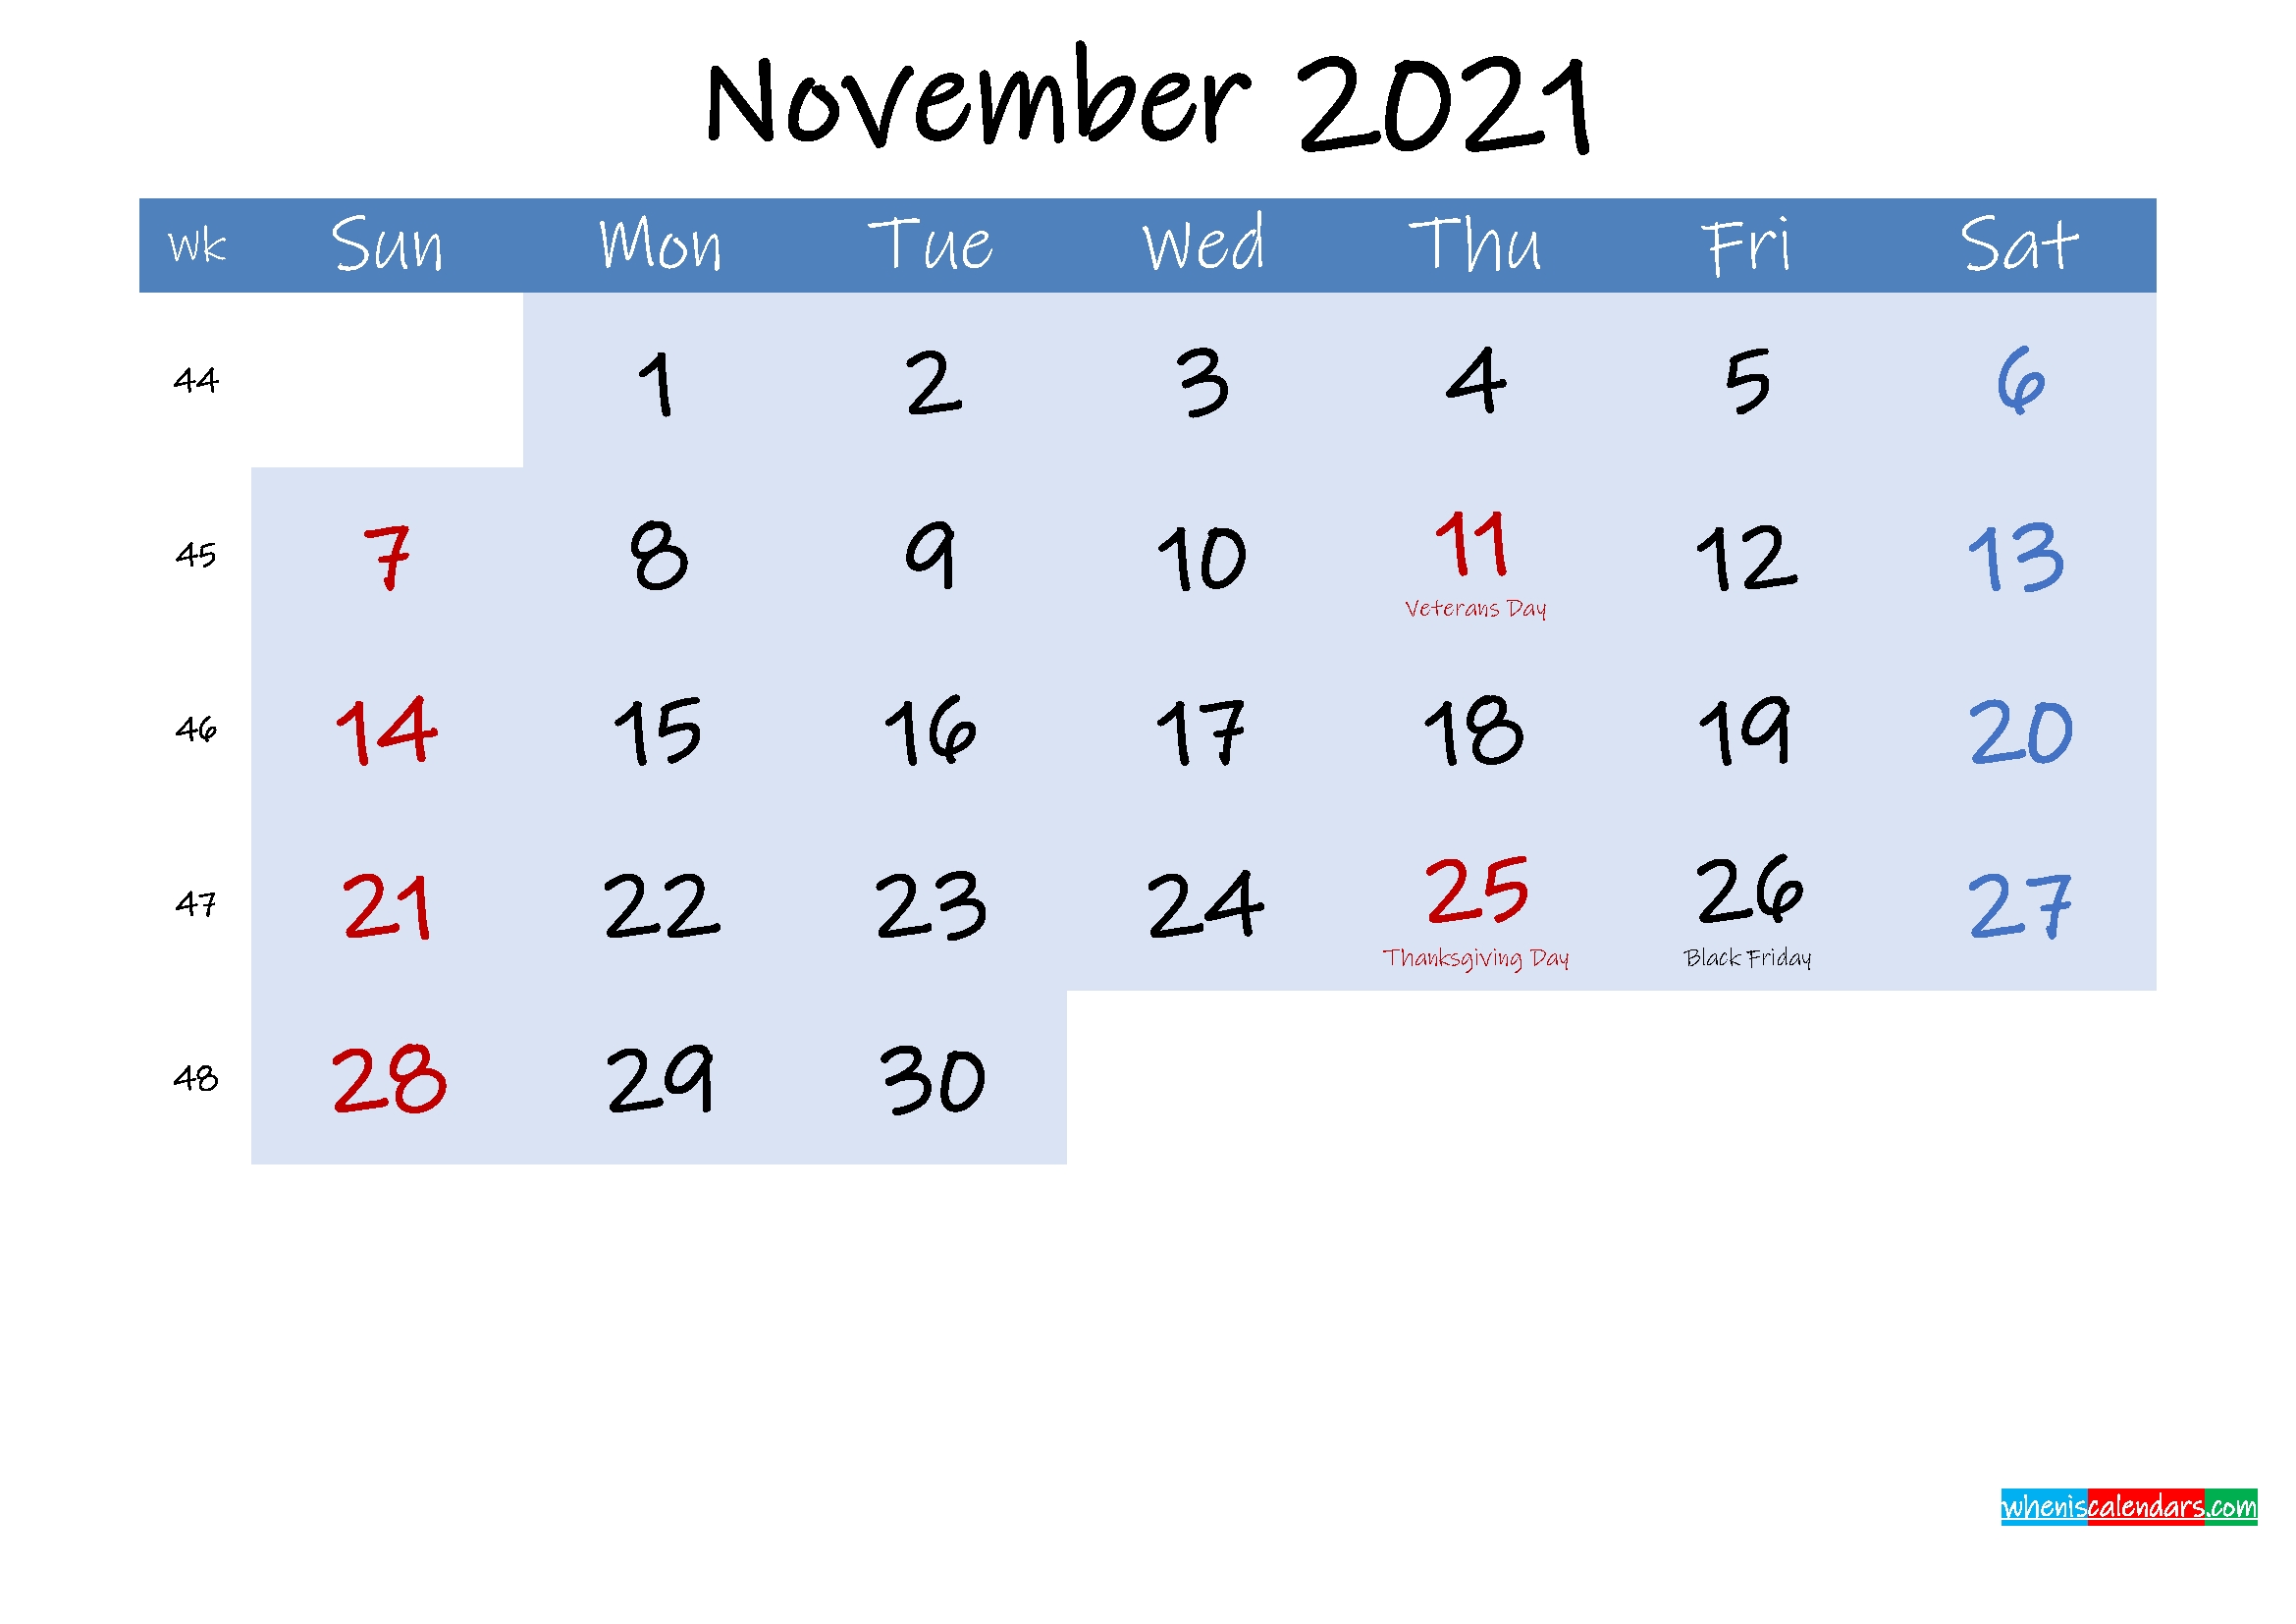 Free November 2021 Monthly Calendar Pdf - Template Ink21M191 - 2021 Calendar Printable November 2021 Calendar Printable